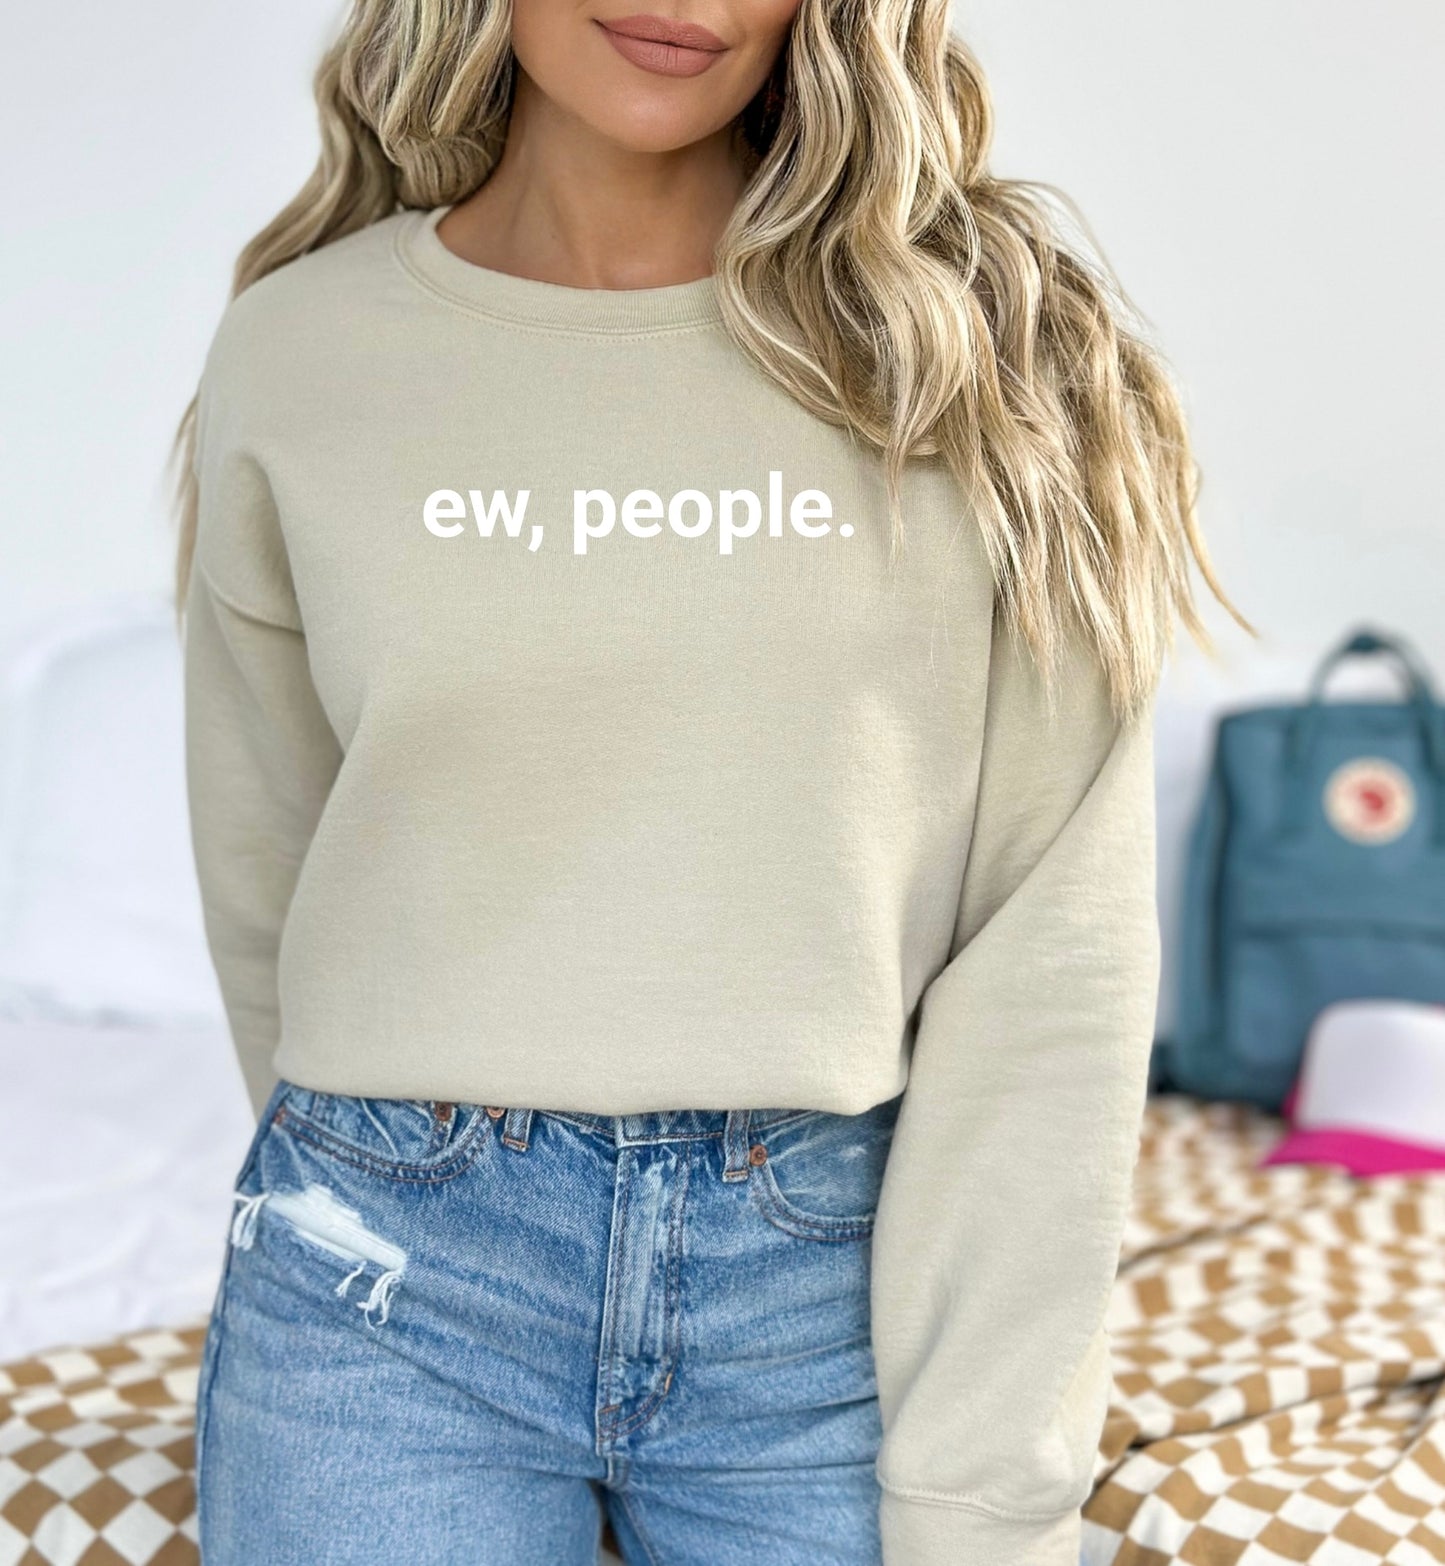 Ew People Hoodie, Ew People Sweater, Ew People Shirt, Funny Gift, Introvert Shirt, Introvert Sweatshirt, Preppy Shirt